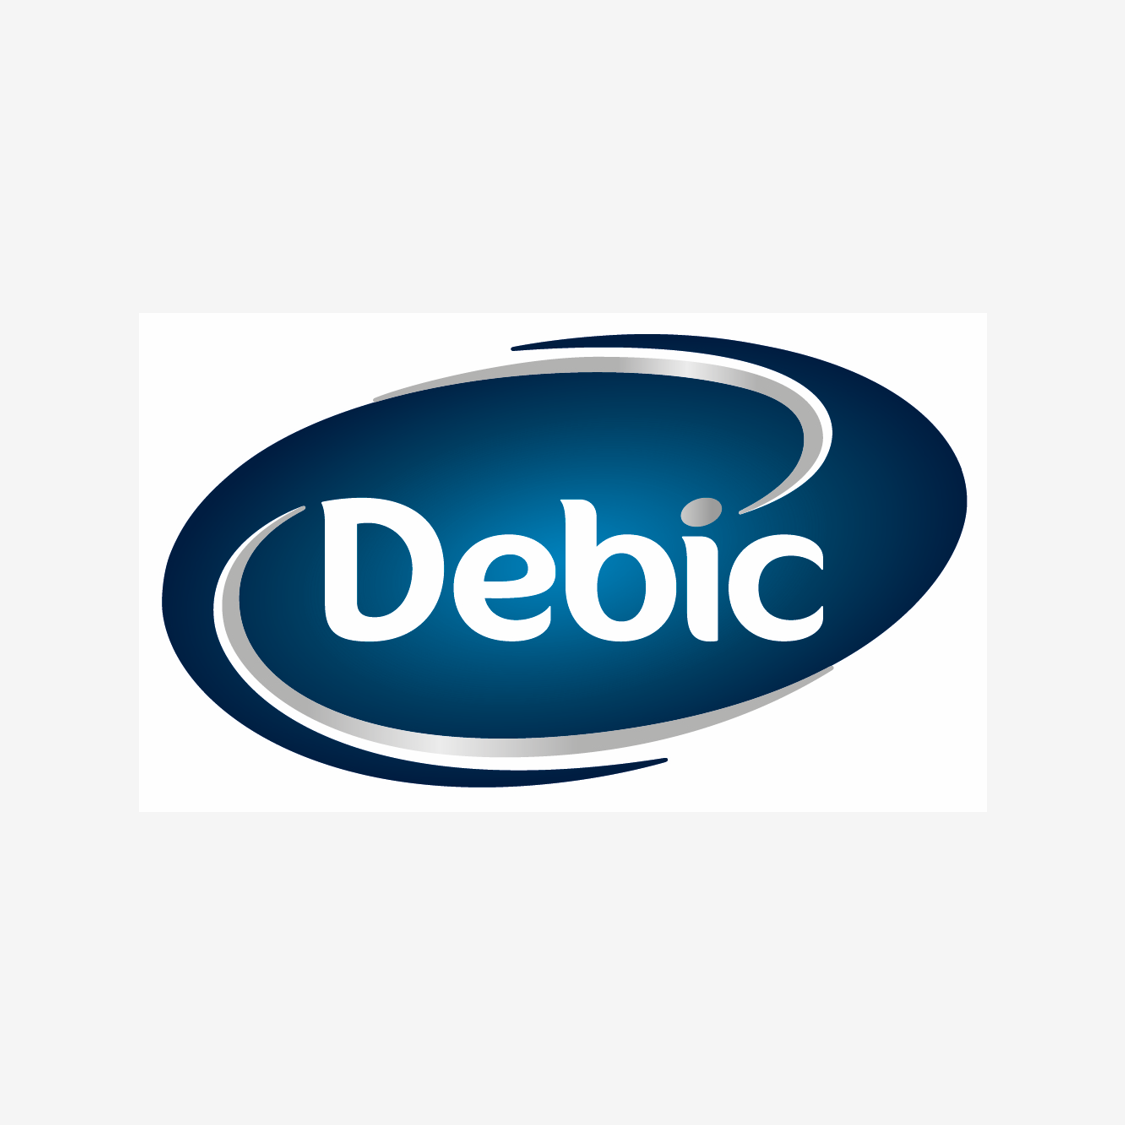 Logo of Debic a FrieslandCampina brand